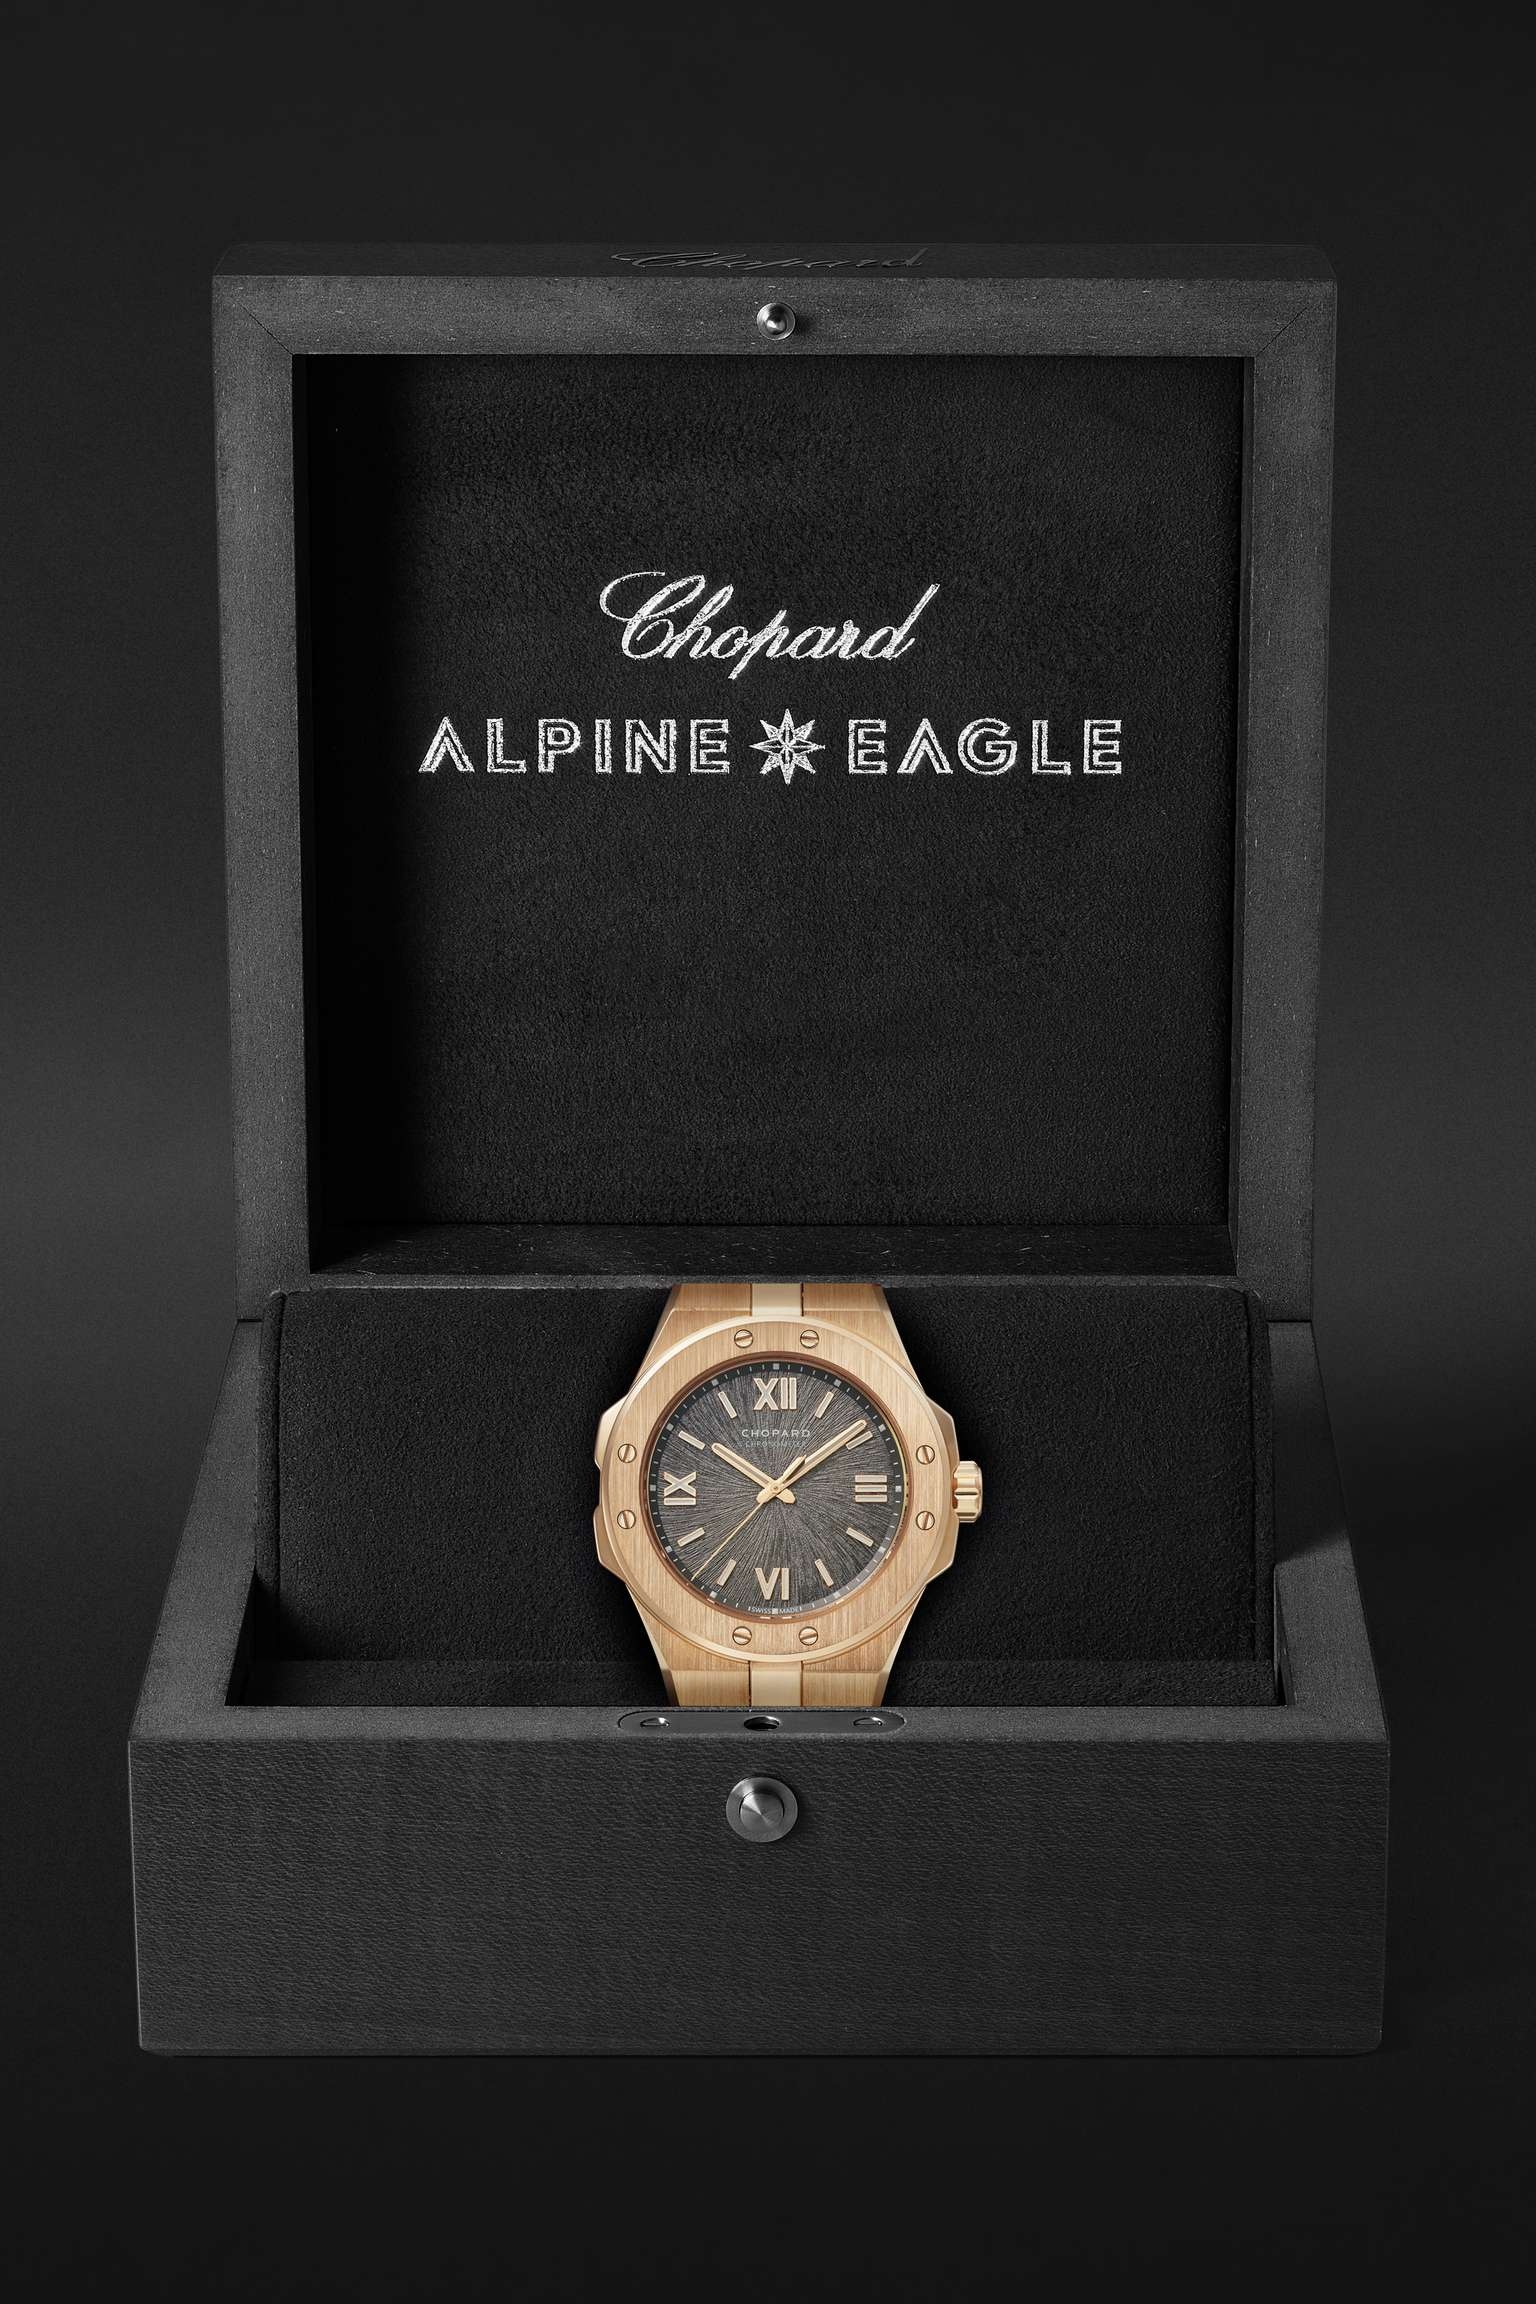 Alpine Eagle Automatic 36mm Brushed 18-Karat Rose Gold Watch, Ref. No. 295370-5001 - 8